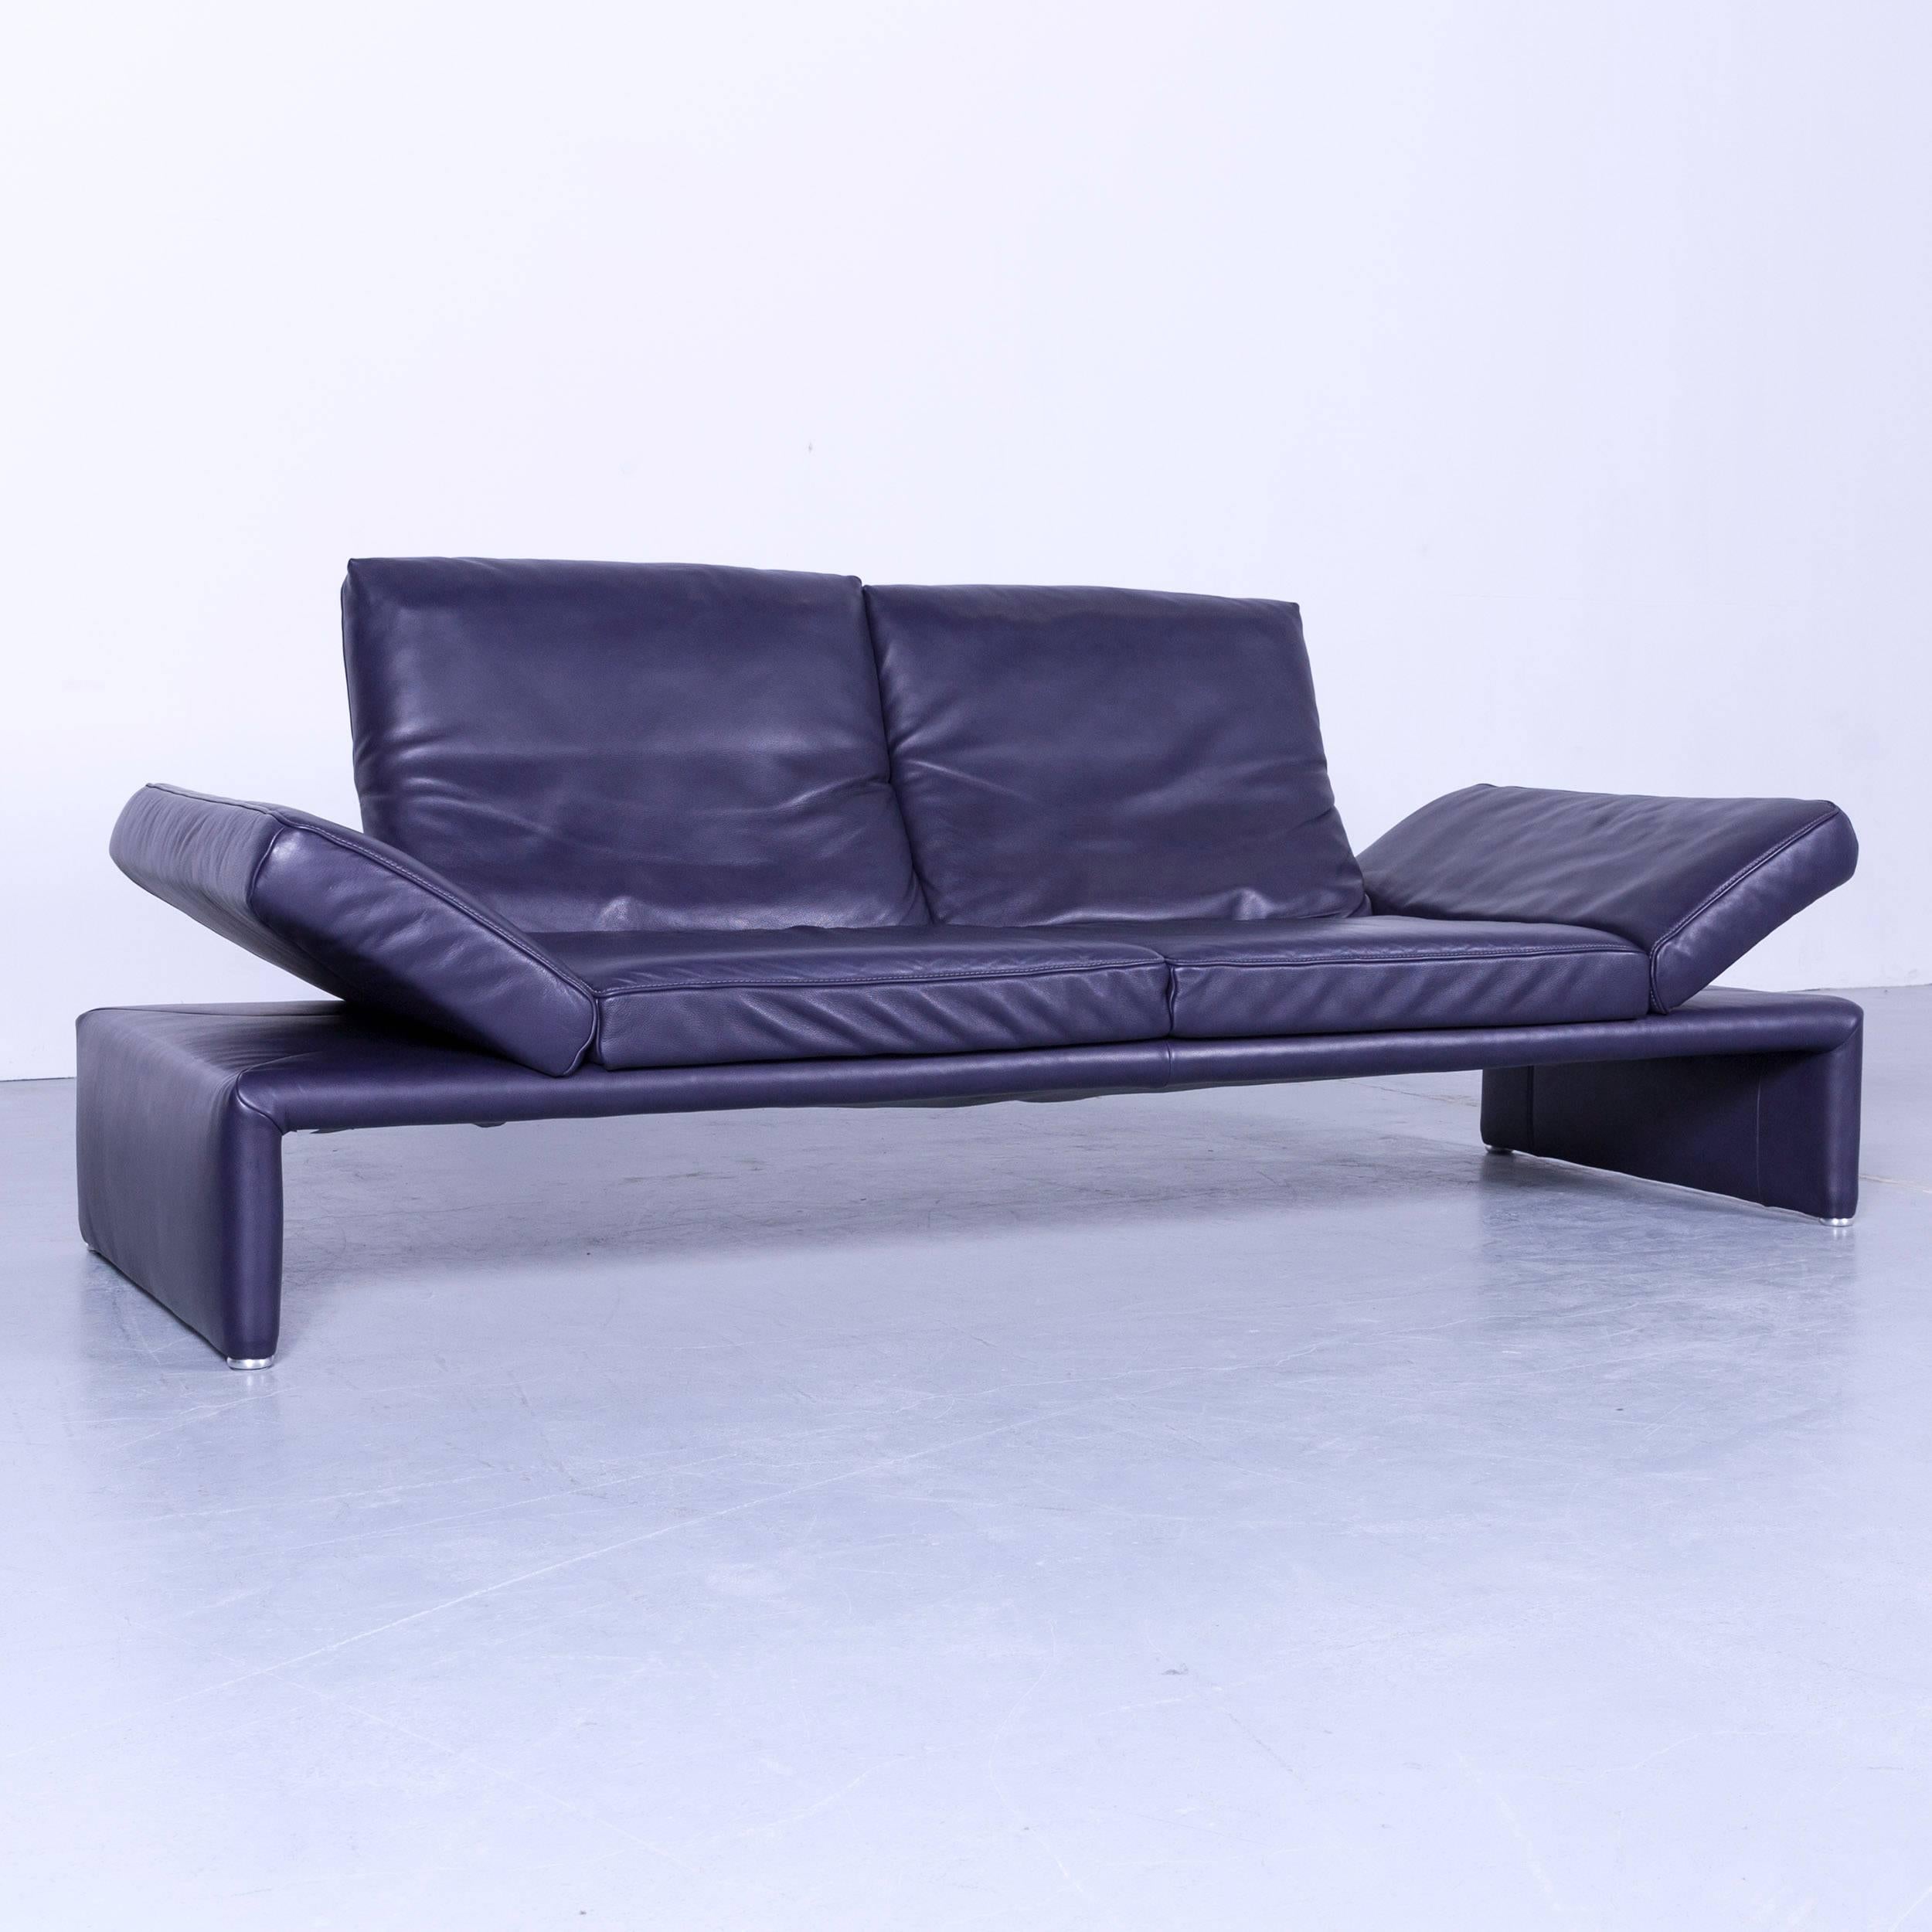 German Koinor Raoul Designer Sofa Set Purple Eggplant Leather Three-Seat Couch